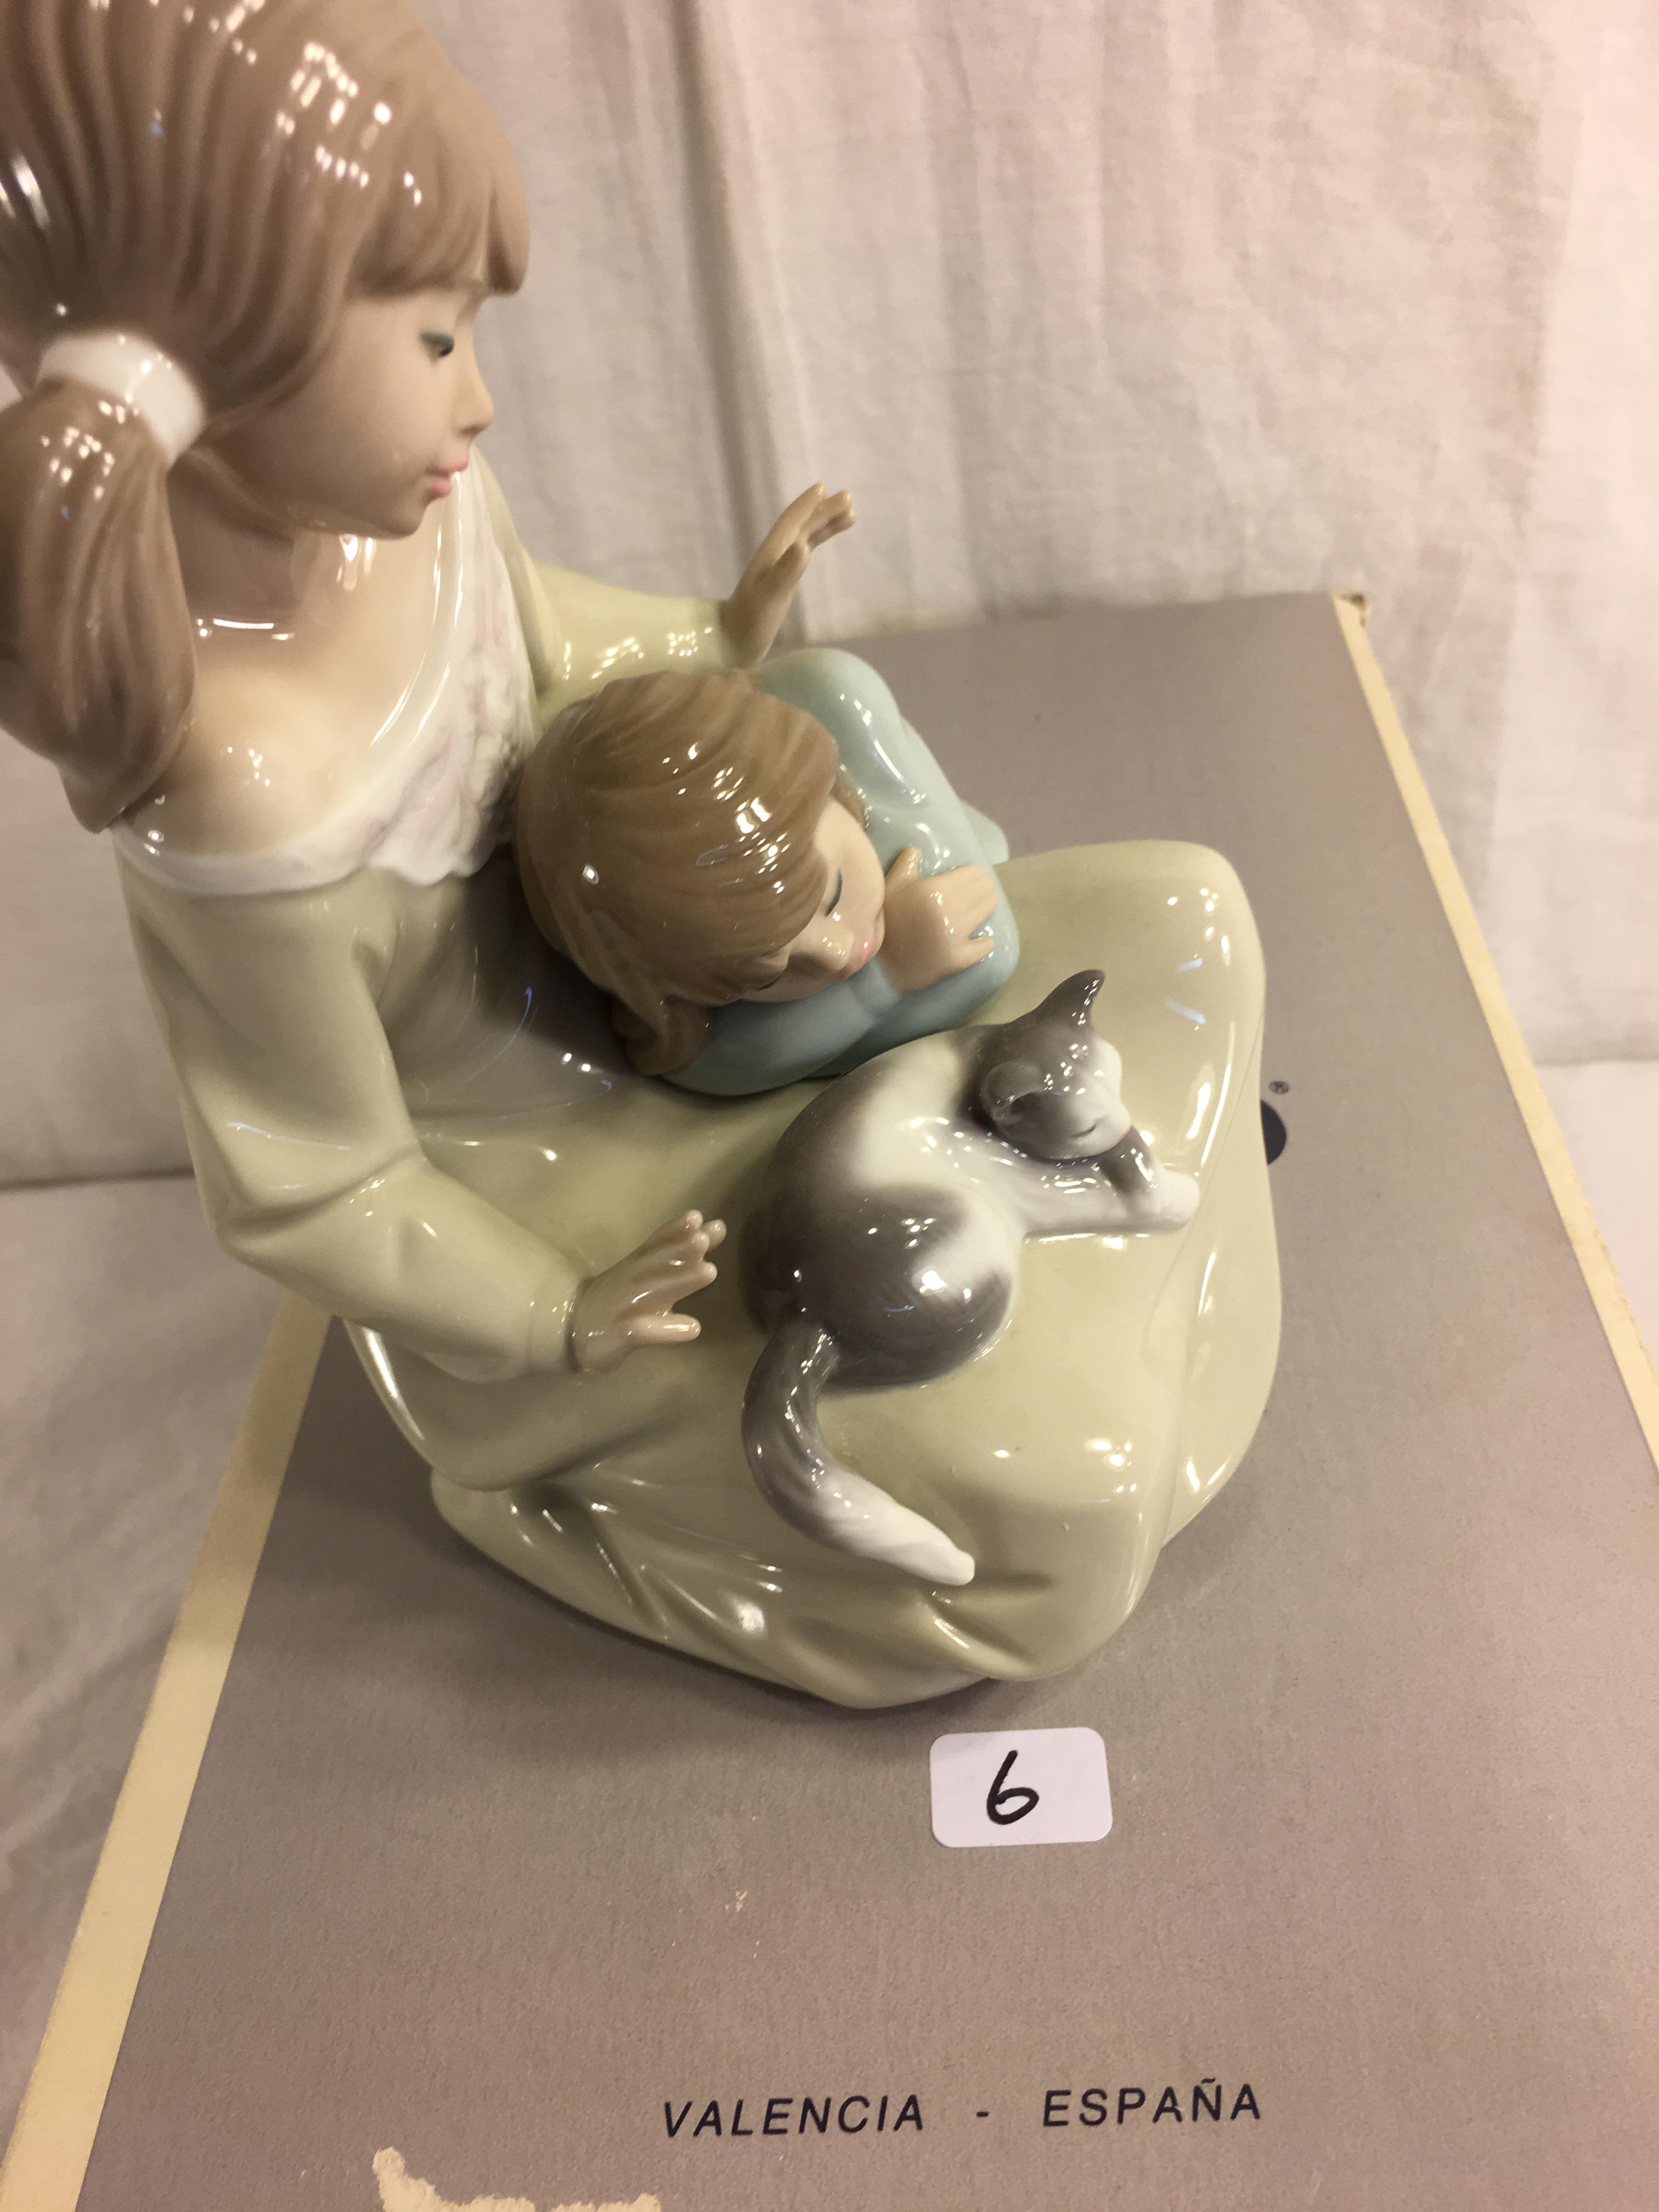 Collector Ritired Lladro " Little Sister" Figurine #1534, Retired Fiurine Box Size: 13.5x7.5x5" Box